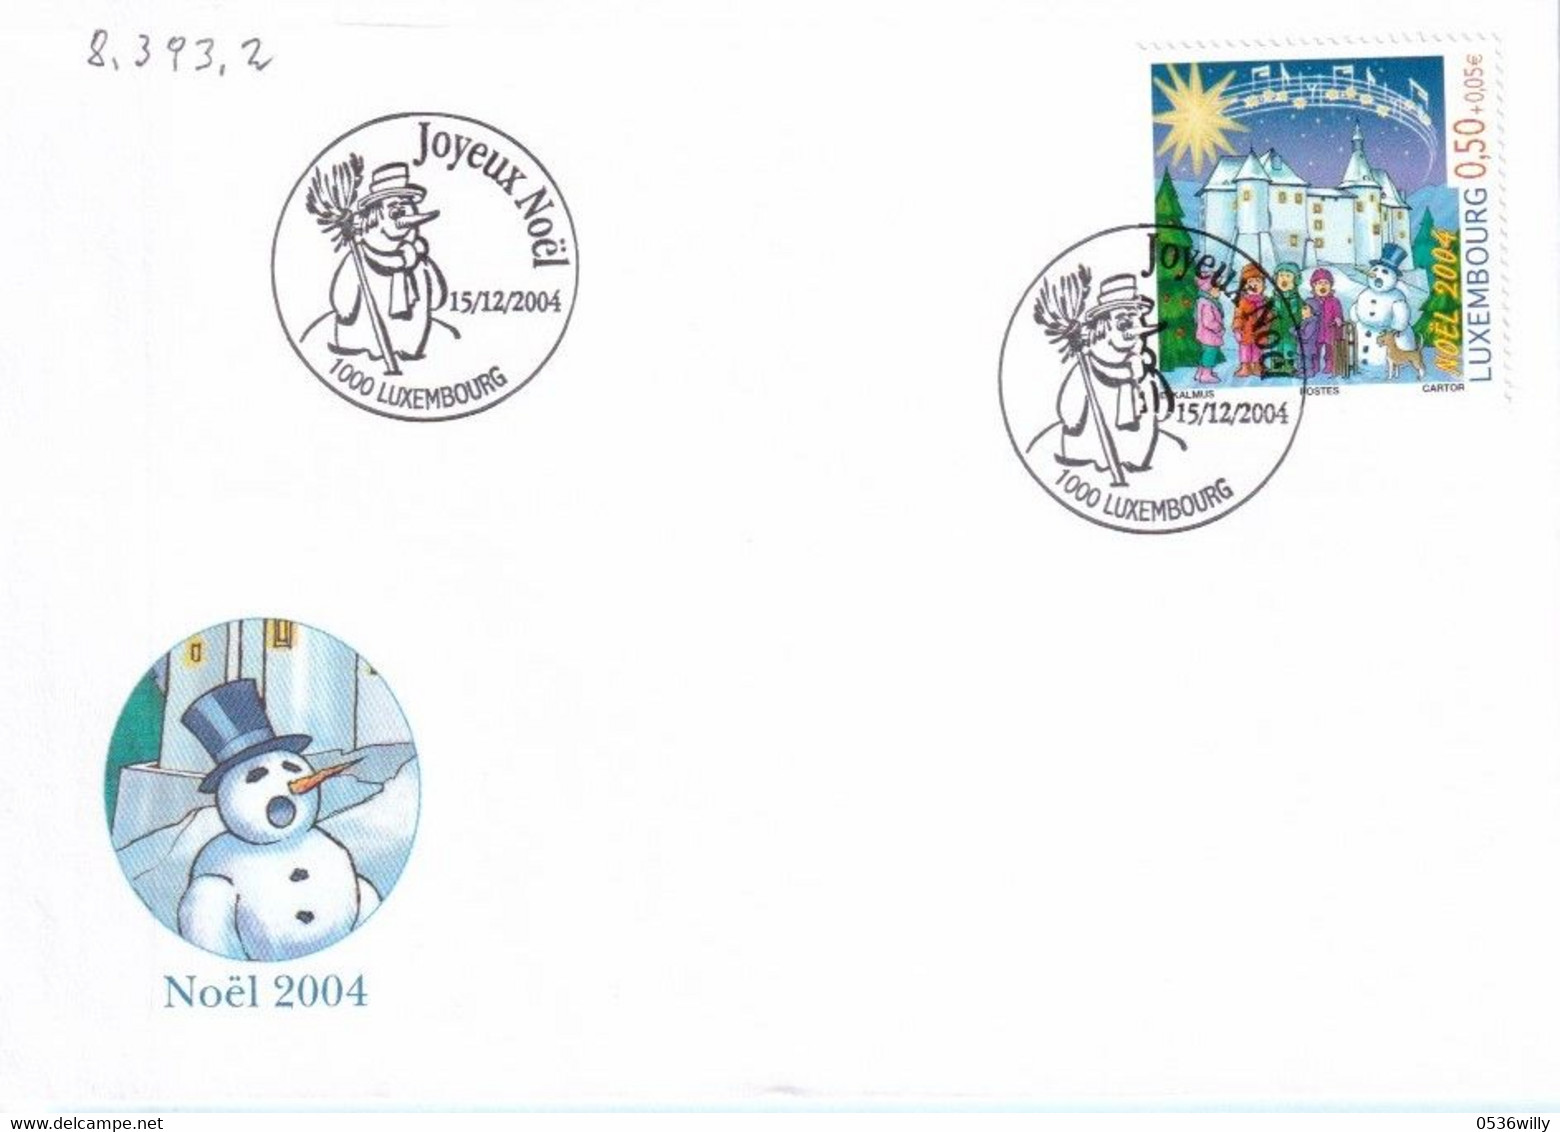 Luxembourg - Joyeux Noel (8.393.2) - Covers & Documents